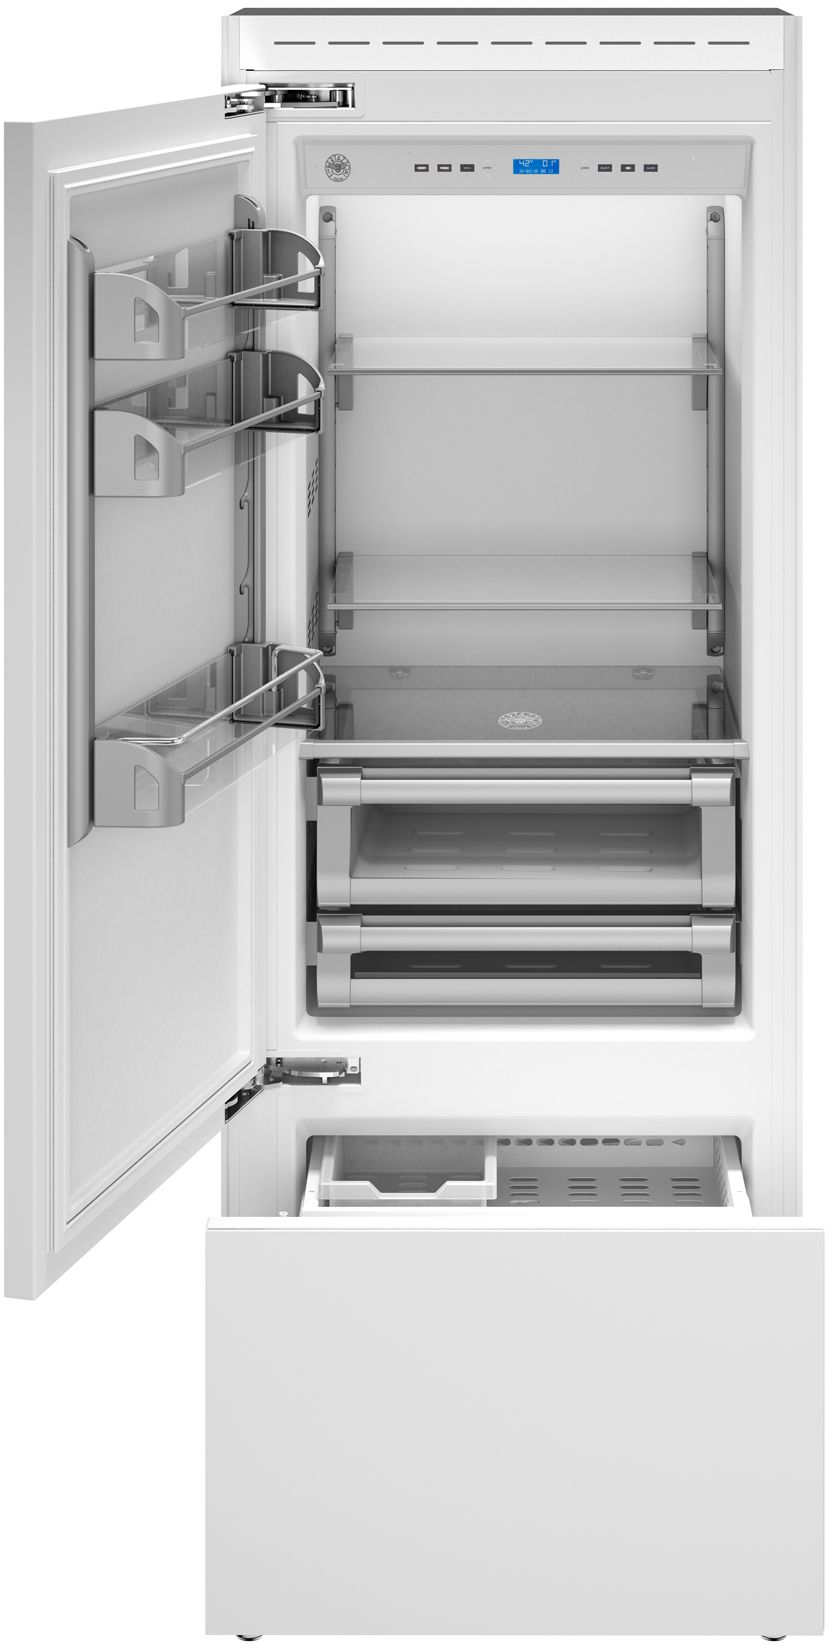 Bertazzoni Heritage Series 14.0 Cu. Ft. Panel Ready Built In Refrigerator